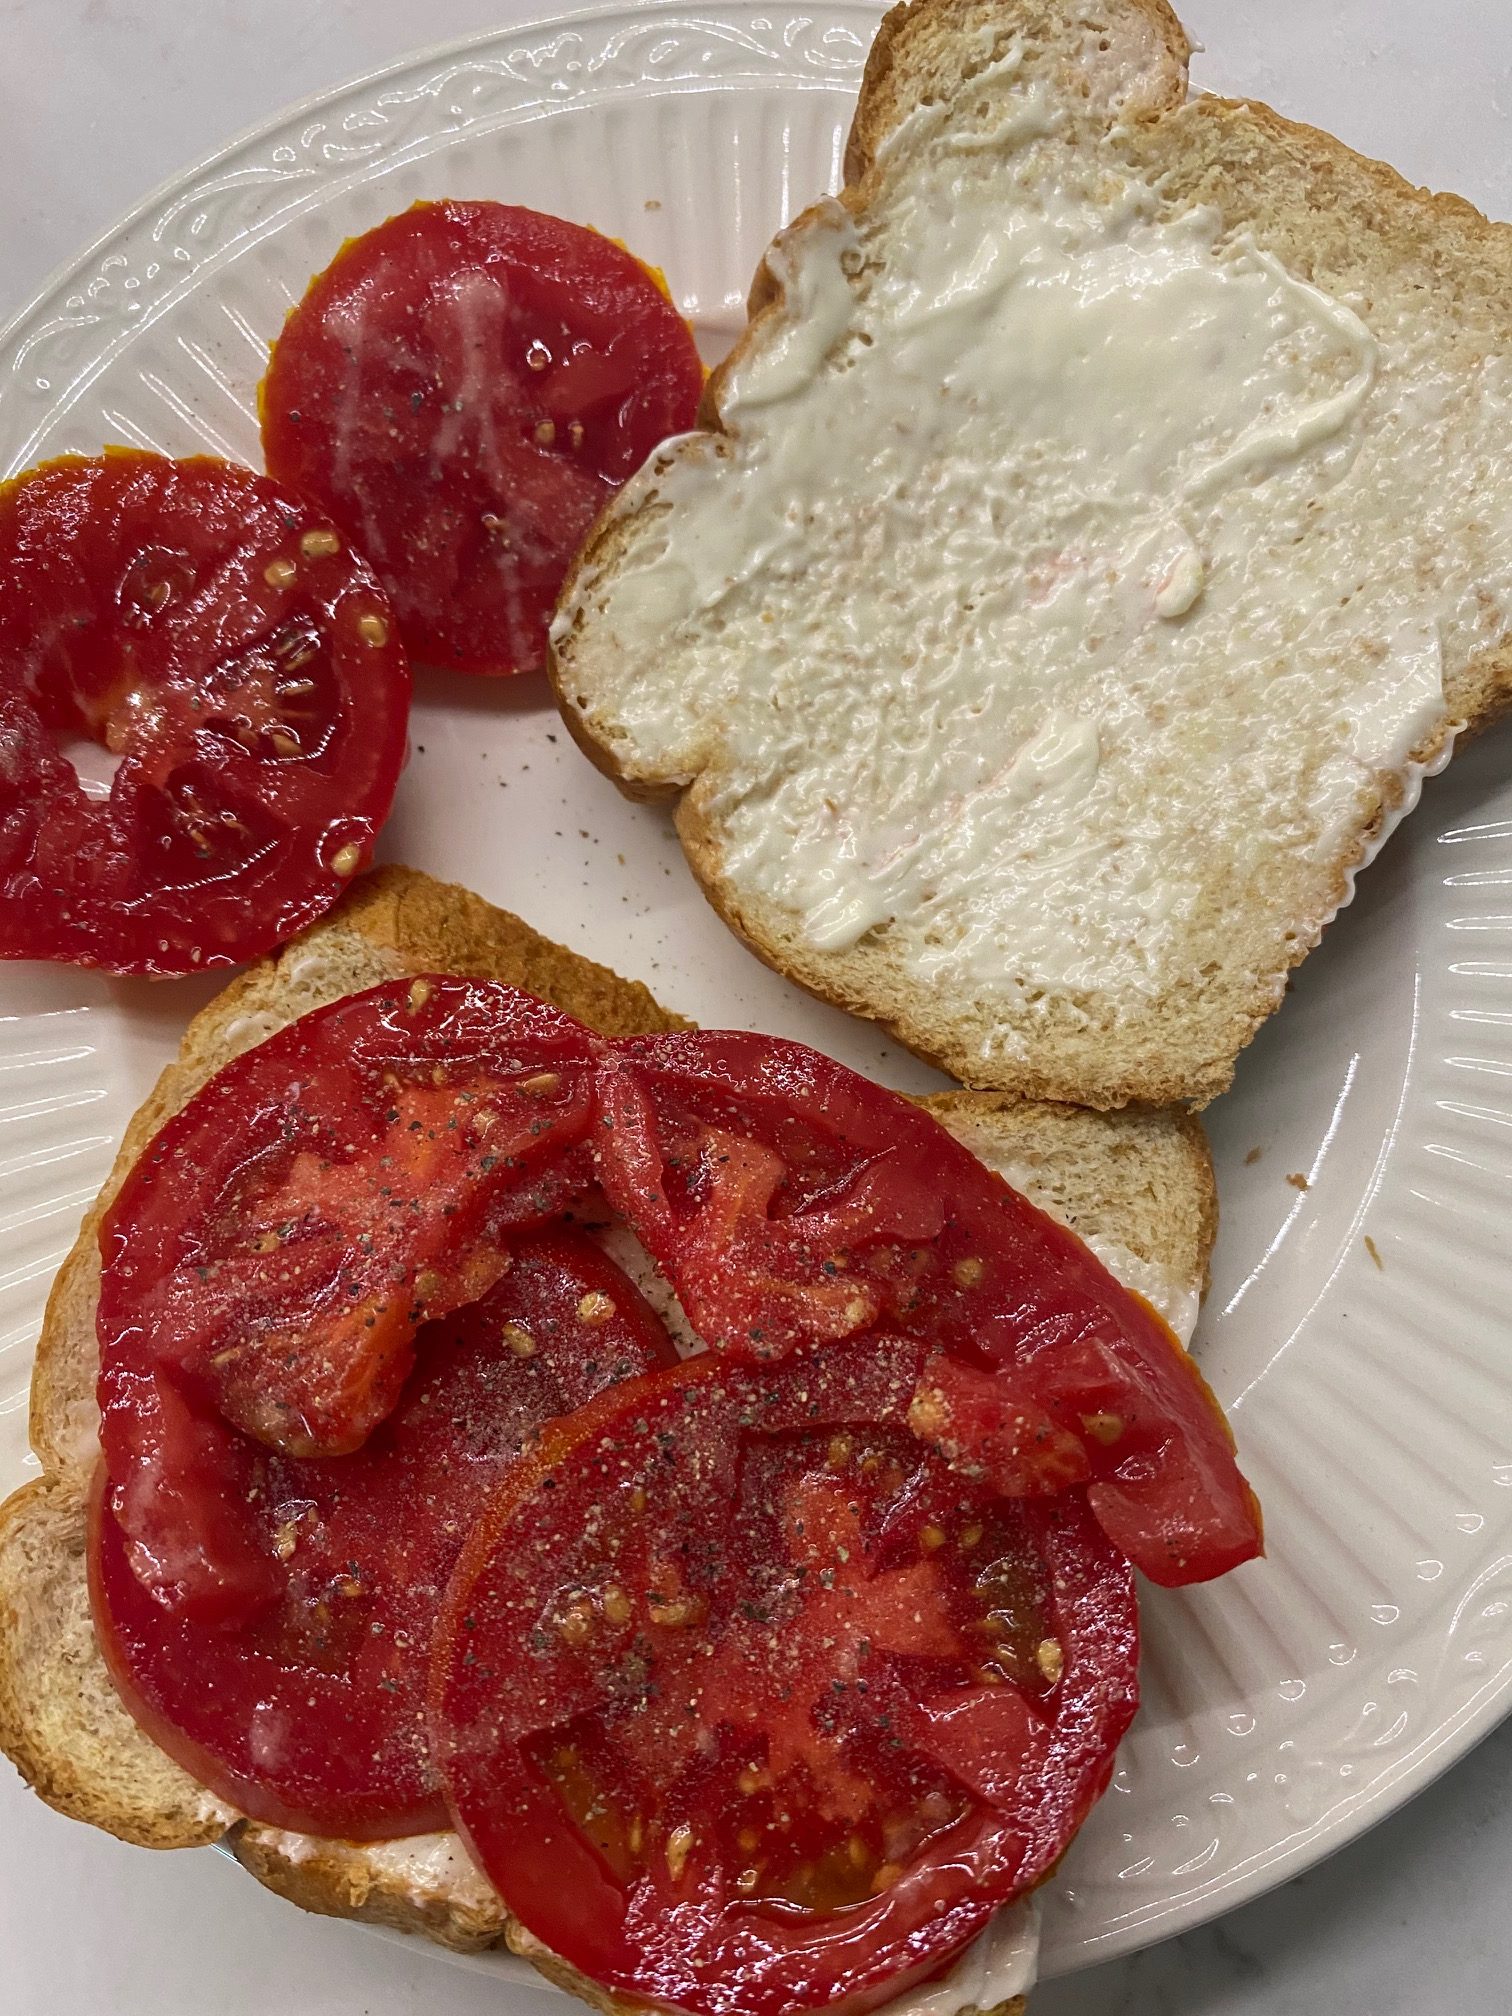 Tomato sandwich rotated